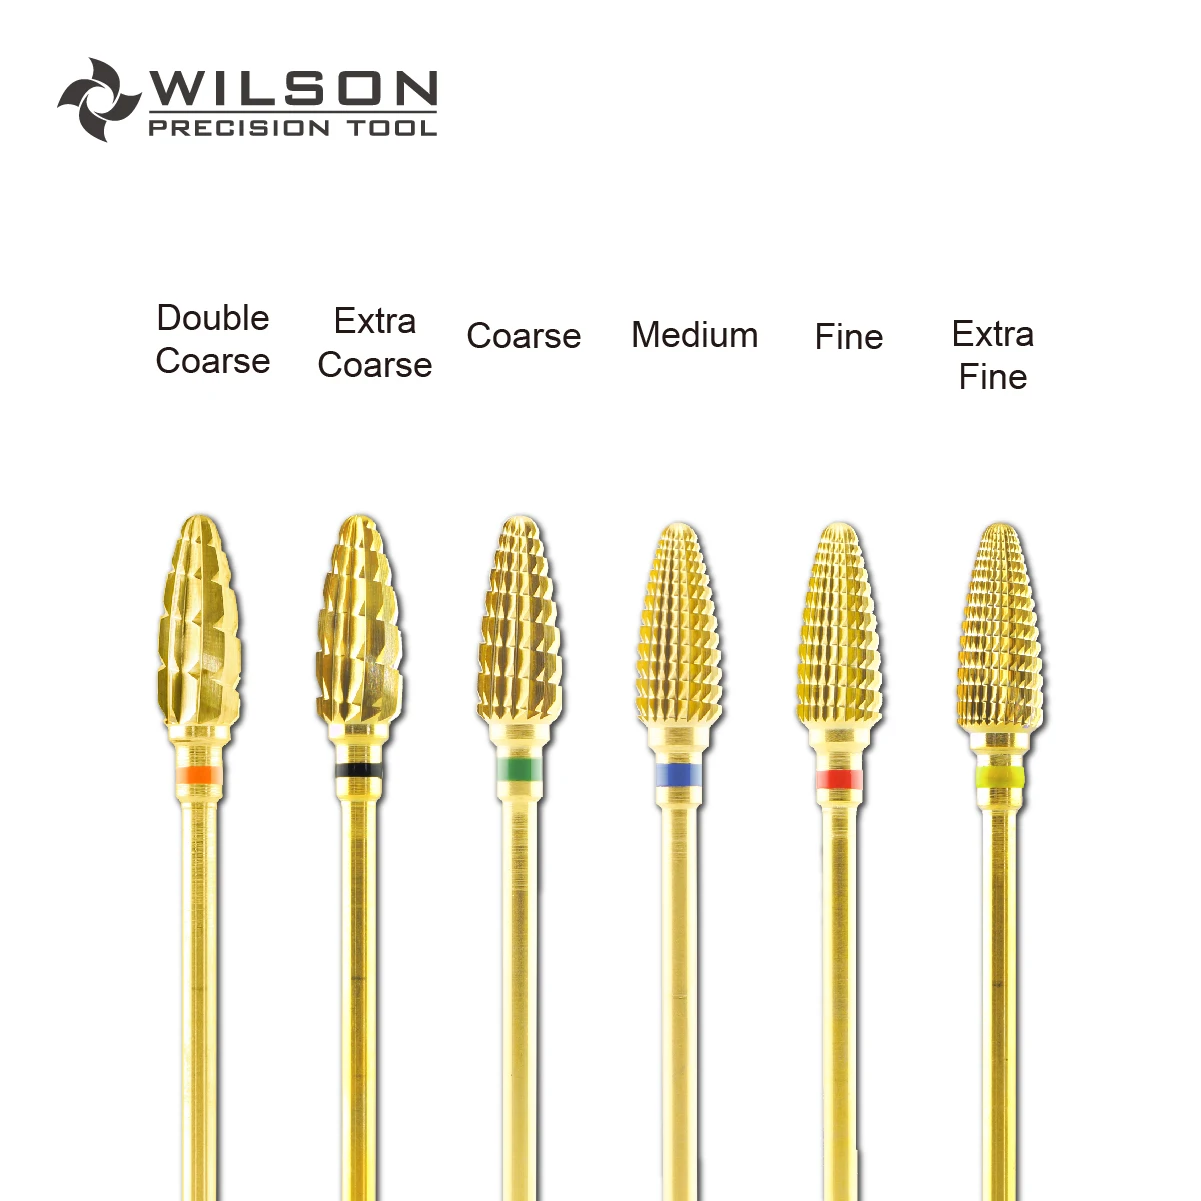 Large Cone - Gold/Silver - WILSON Carbide Nail Drill Bits Electric Manicure Drill & Accessory